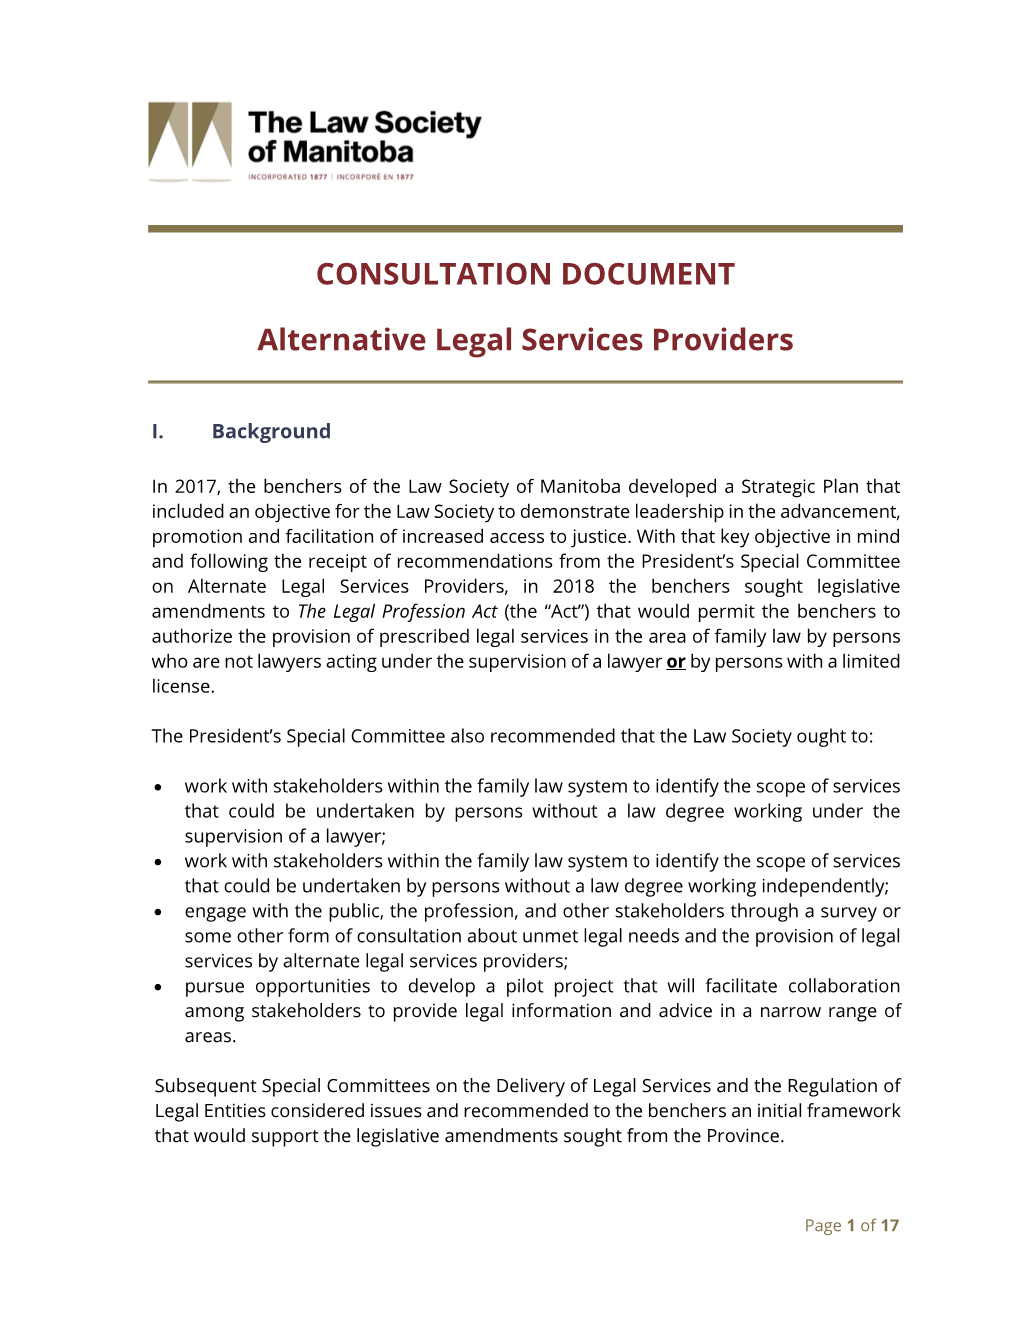 CONSULTATION DOCUMENT Alternative Legal Services Providers